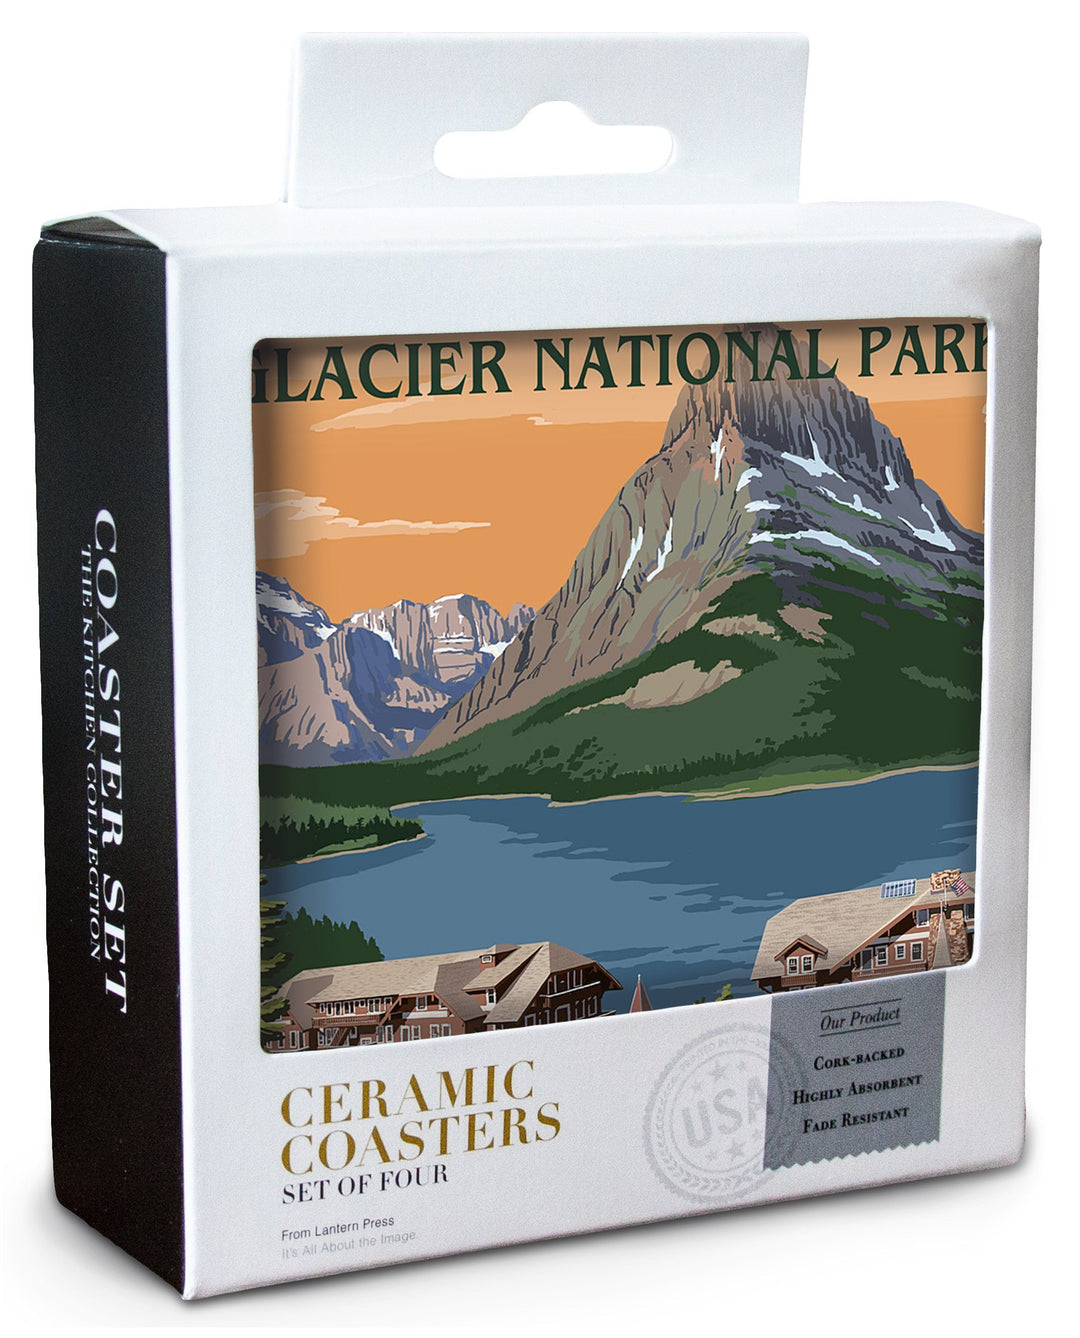 Glacier National Park, Montana, Many Glacier Hotel, Lantern Press Artwork, Coaster Set Coasters Lantern Press 